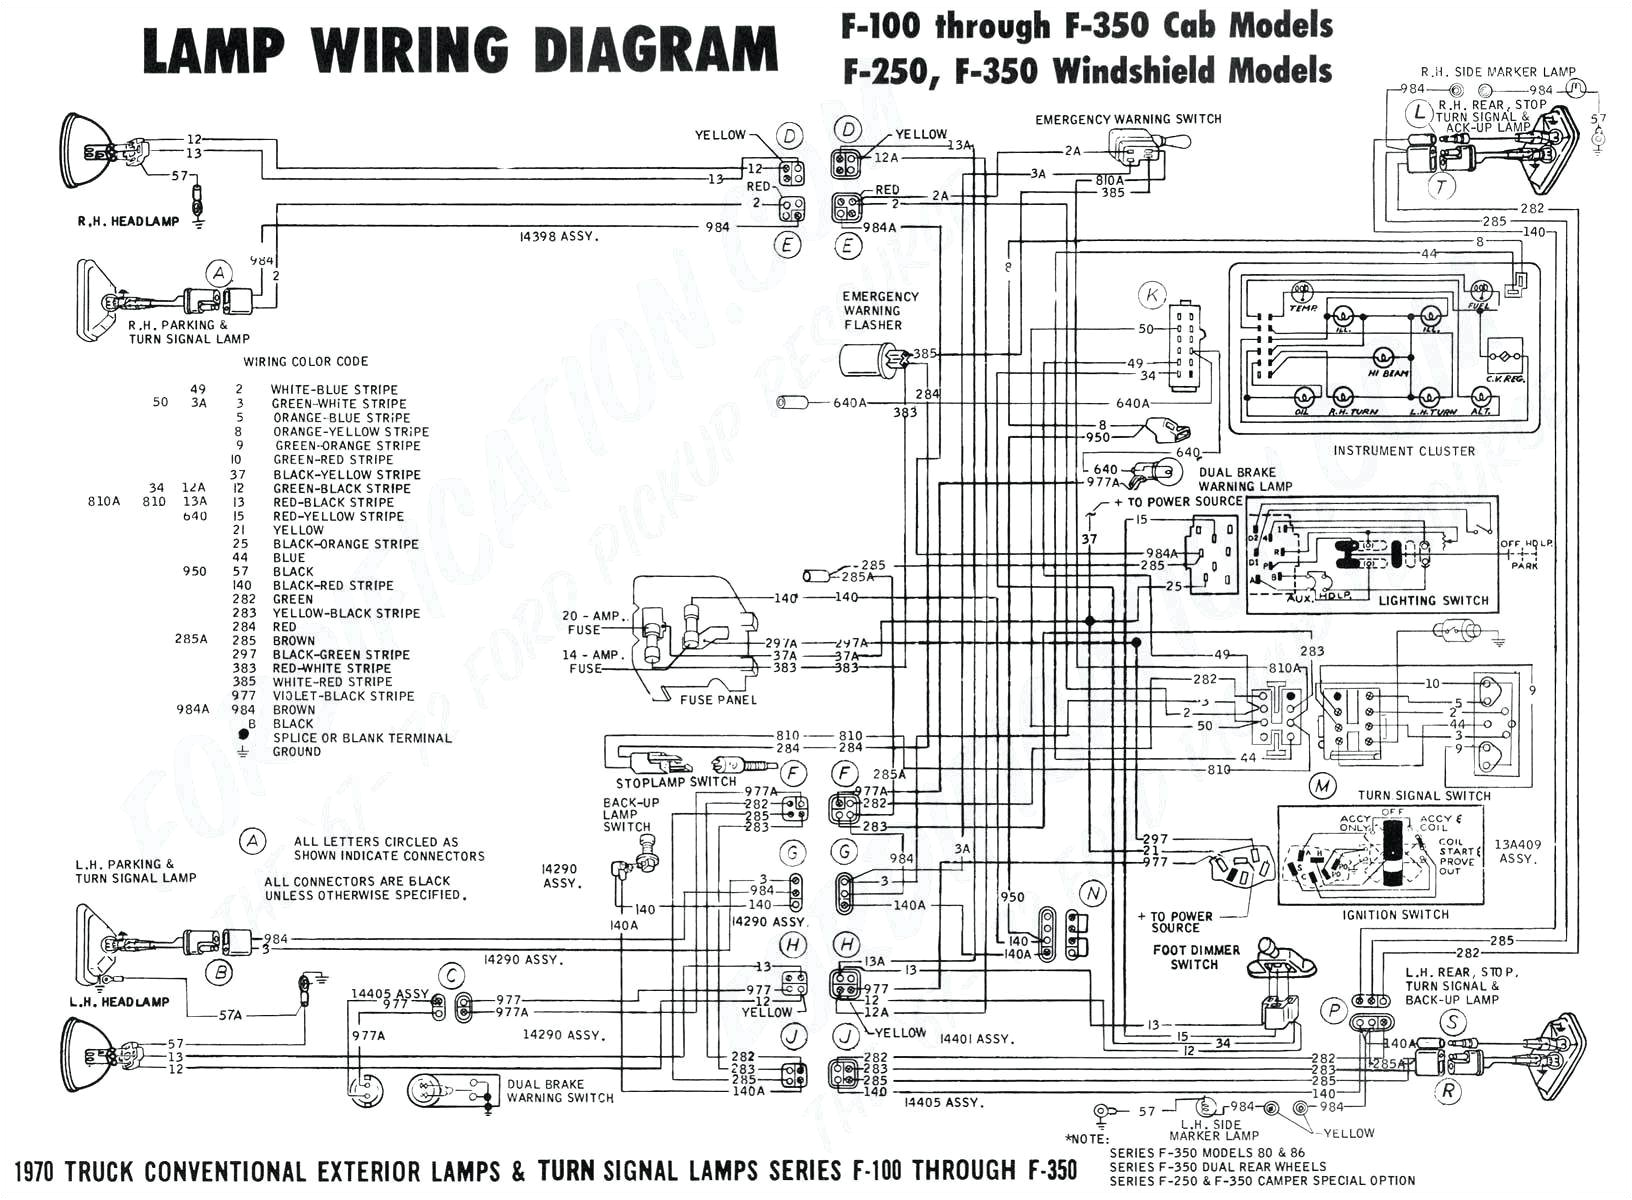 wiring diagram schematic diagram exploded views access content automotive wiring daihatsu tagged daihatsu schematic schematic diagram